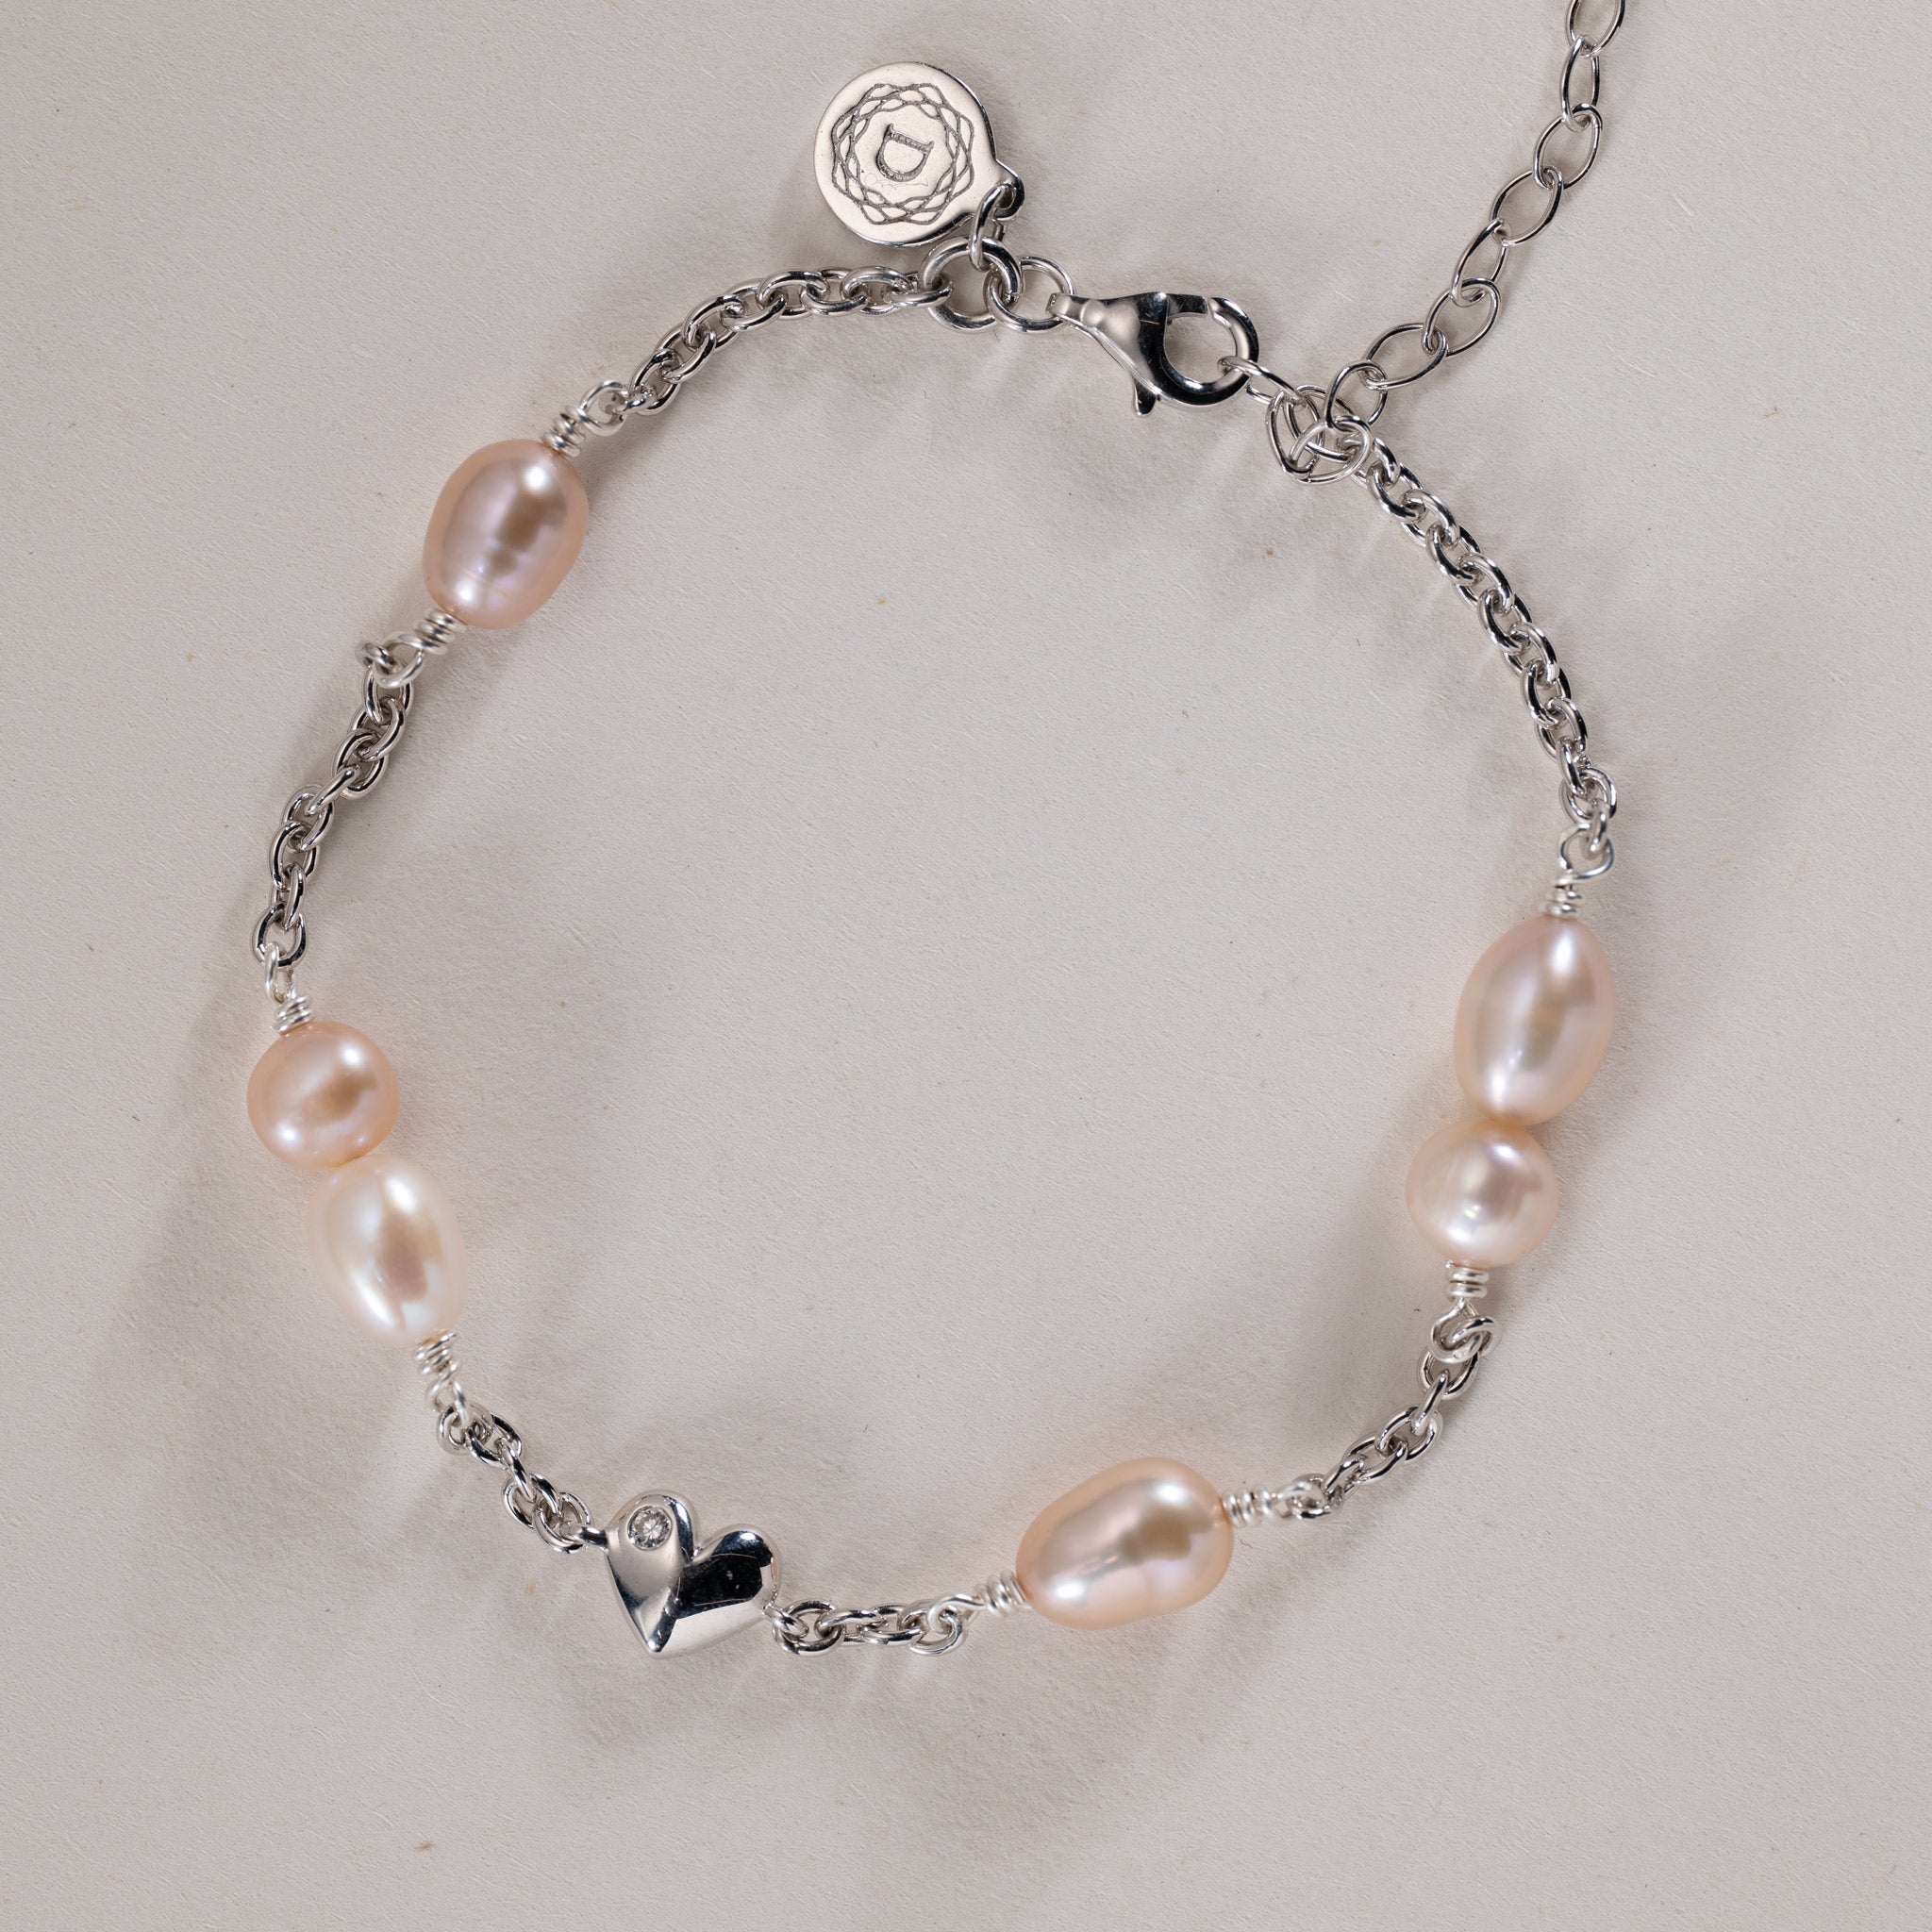 No. 01 - 0.02ct Grown Diamond Twisted heart bracelet in silver w. freshwater pearls